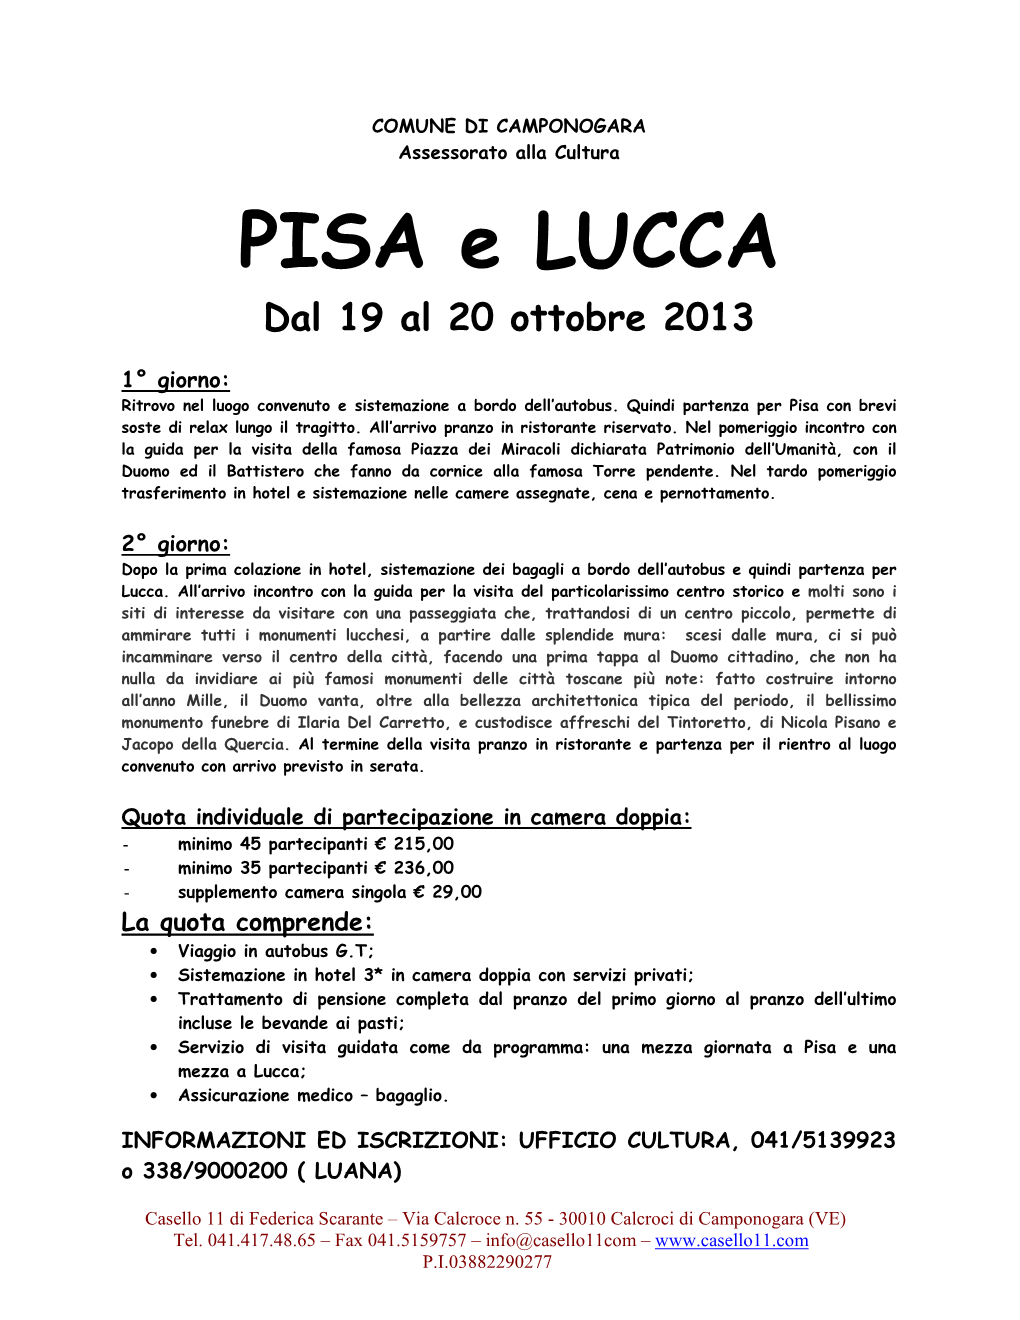 PISA E LUCCA Dal 19 Al 20 Ottobre 2013